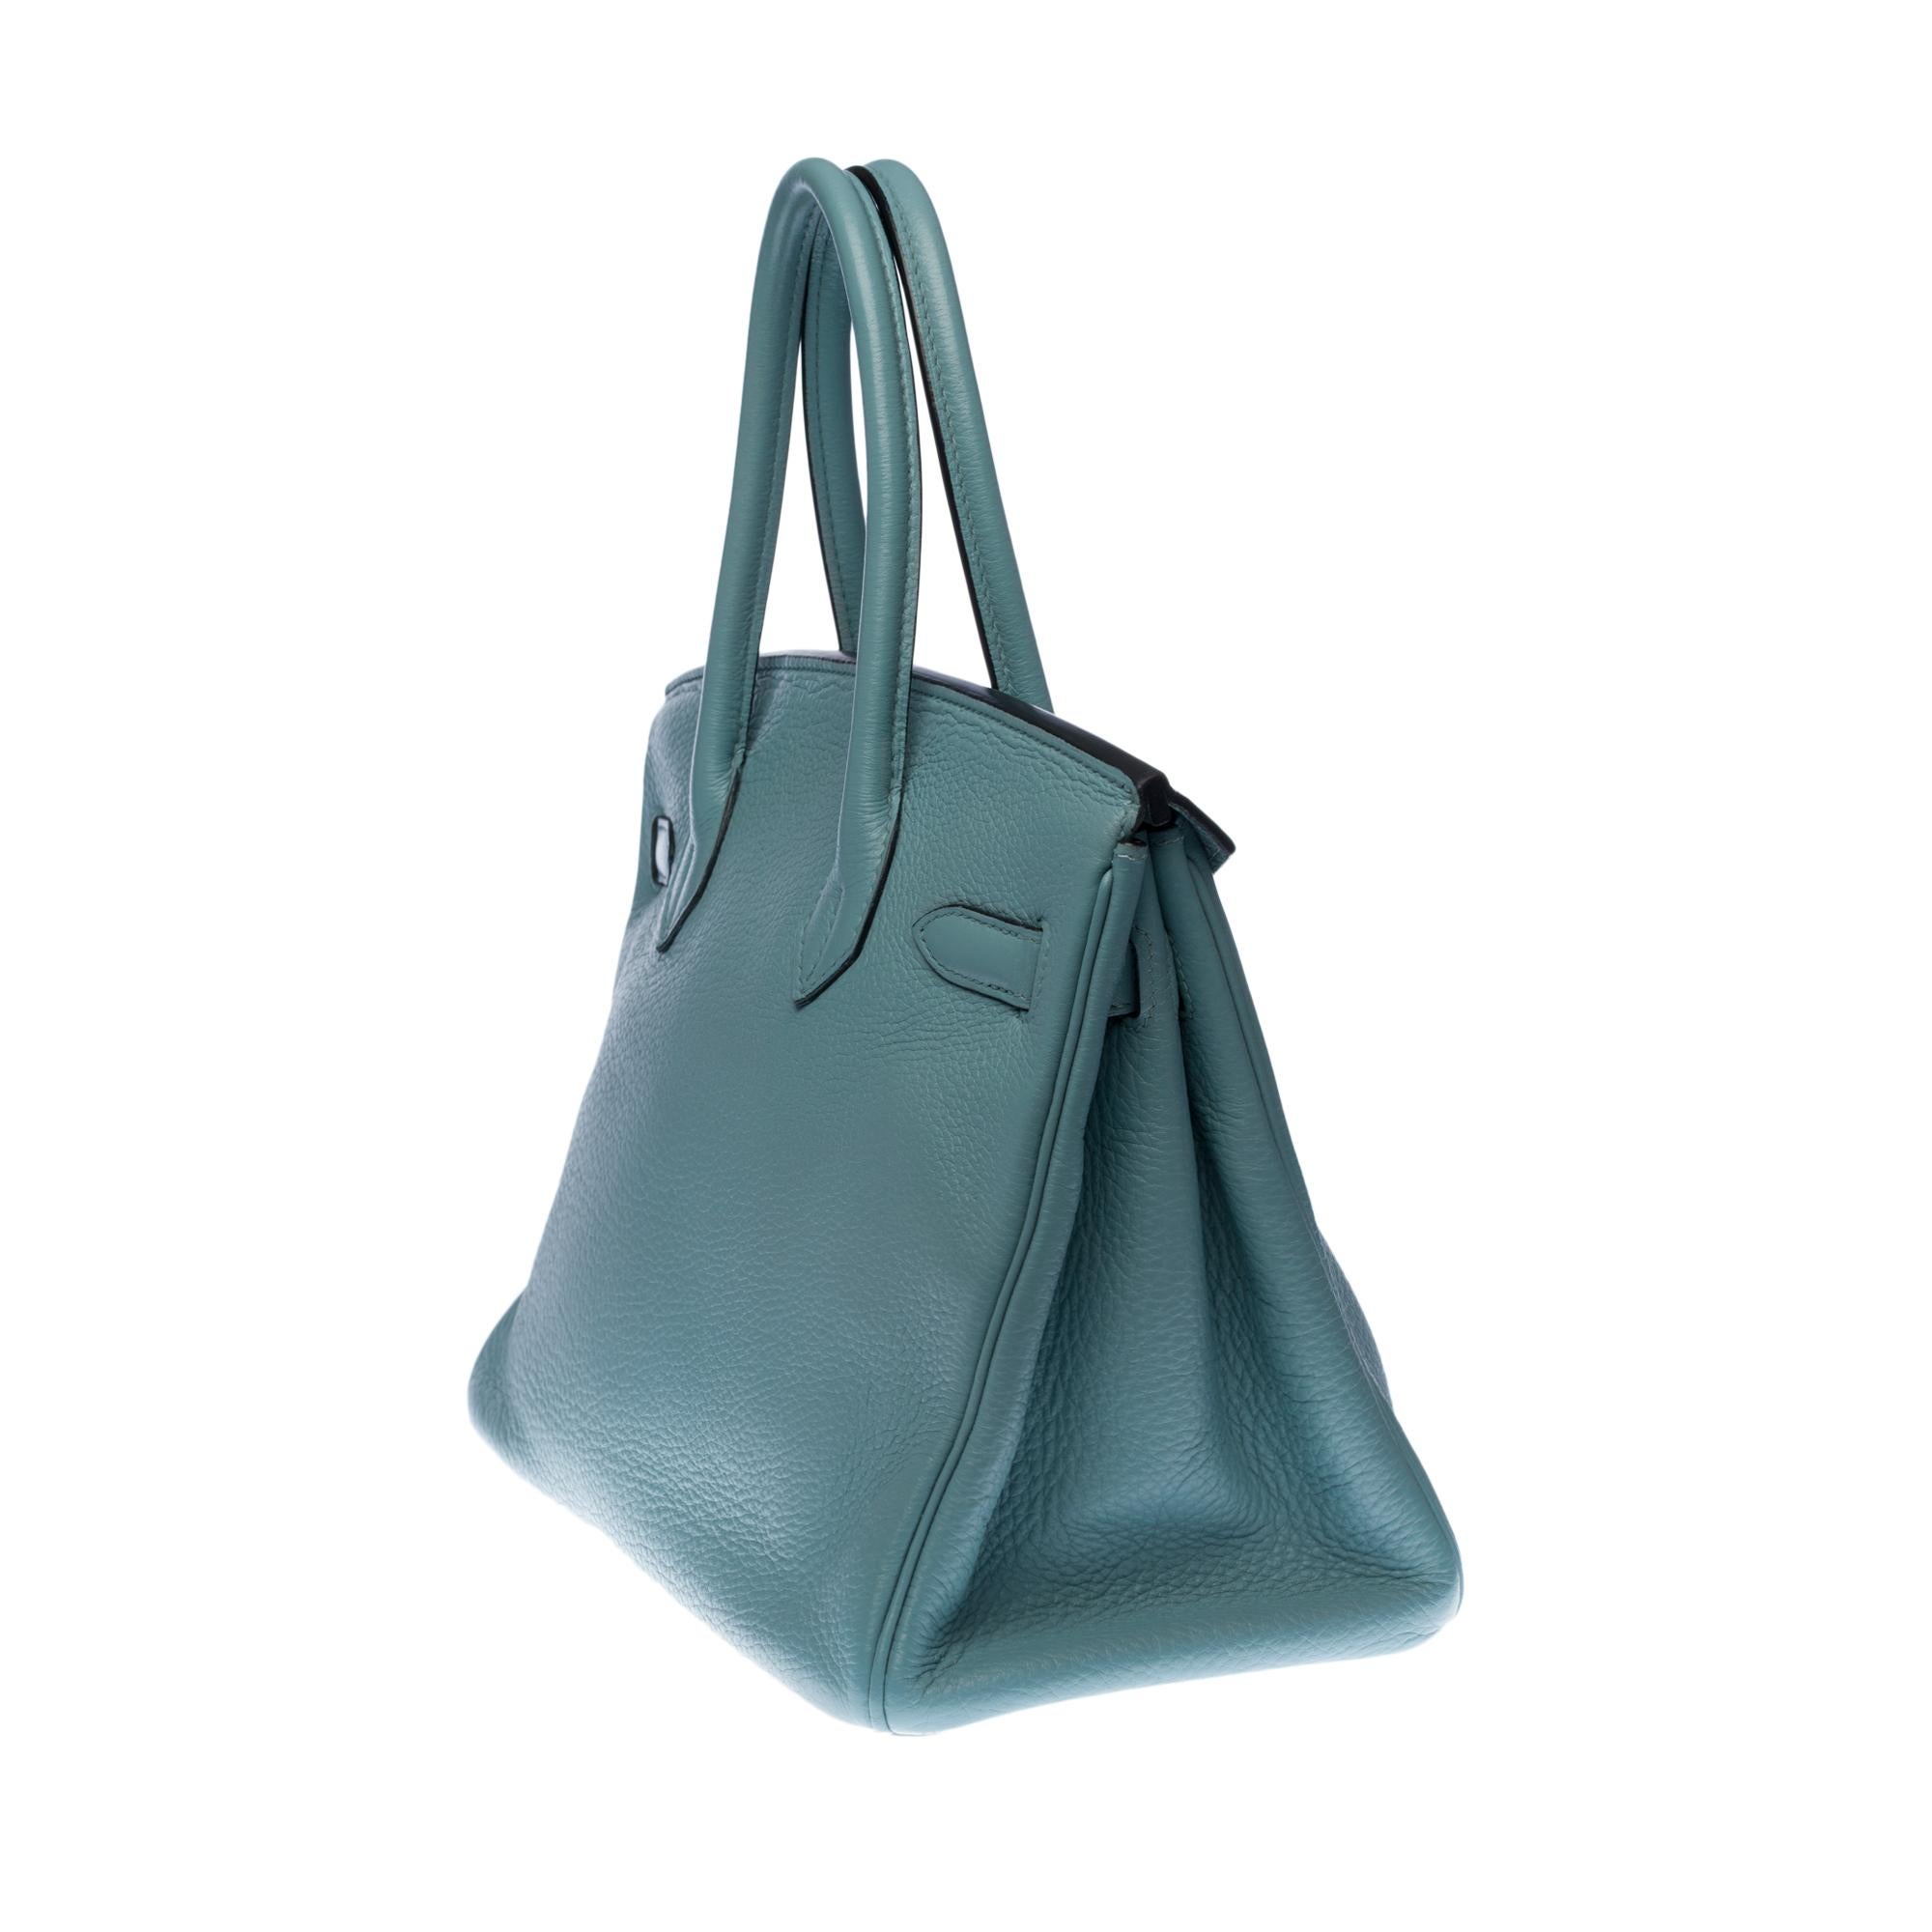 Blue Stunning Hermès Birkin 30 handbag in Bleu ciel Togo leather, SHW